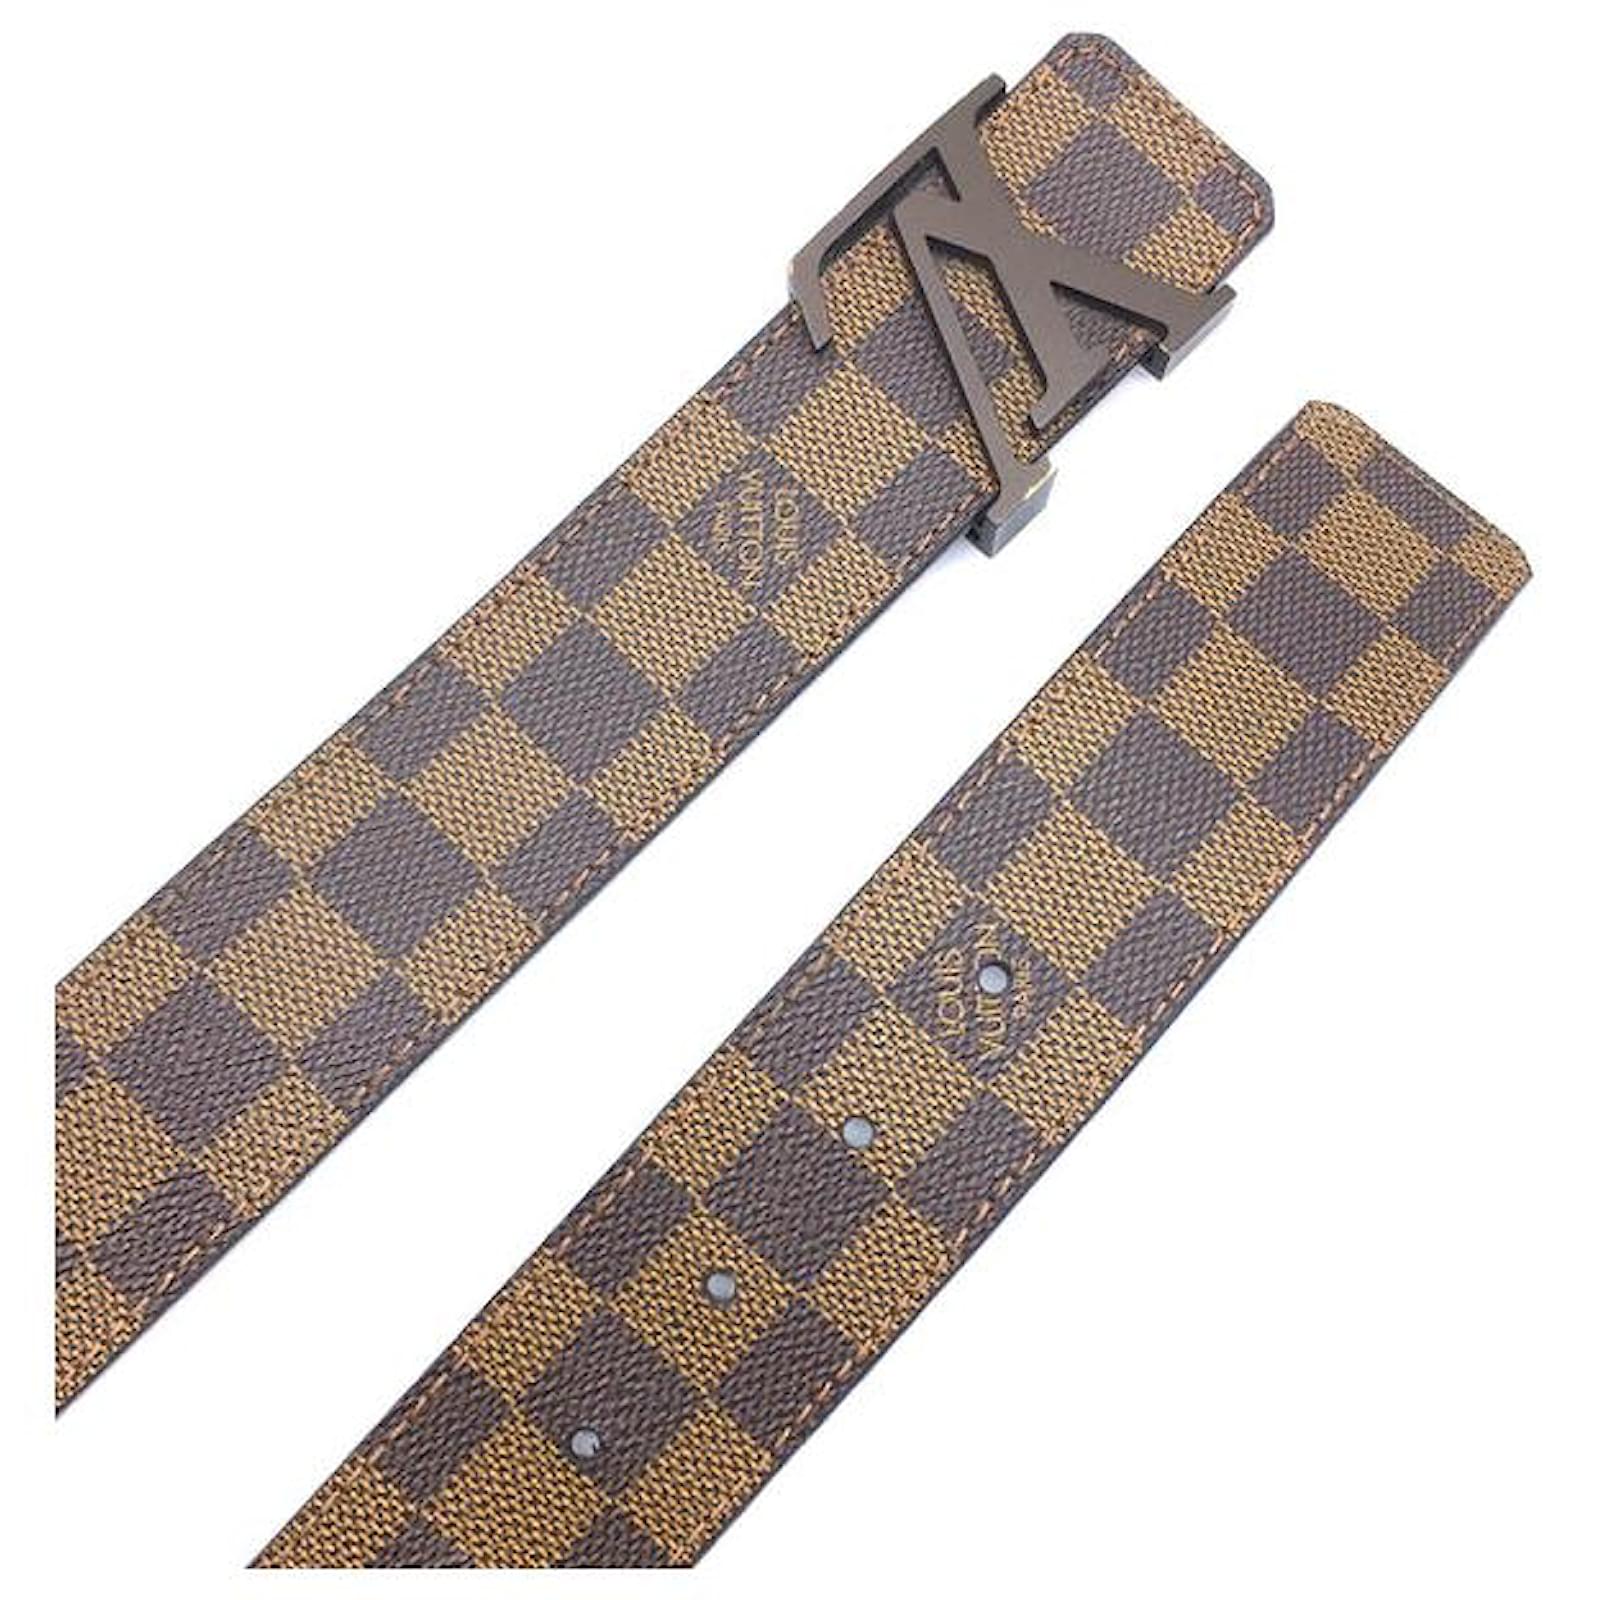 Sizing your belt. ##LouisVuittonBelt##BeltSize##DesignerBelt##authenti, Louis  Vuitton Belts